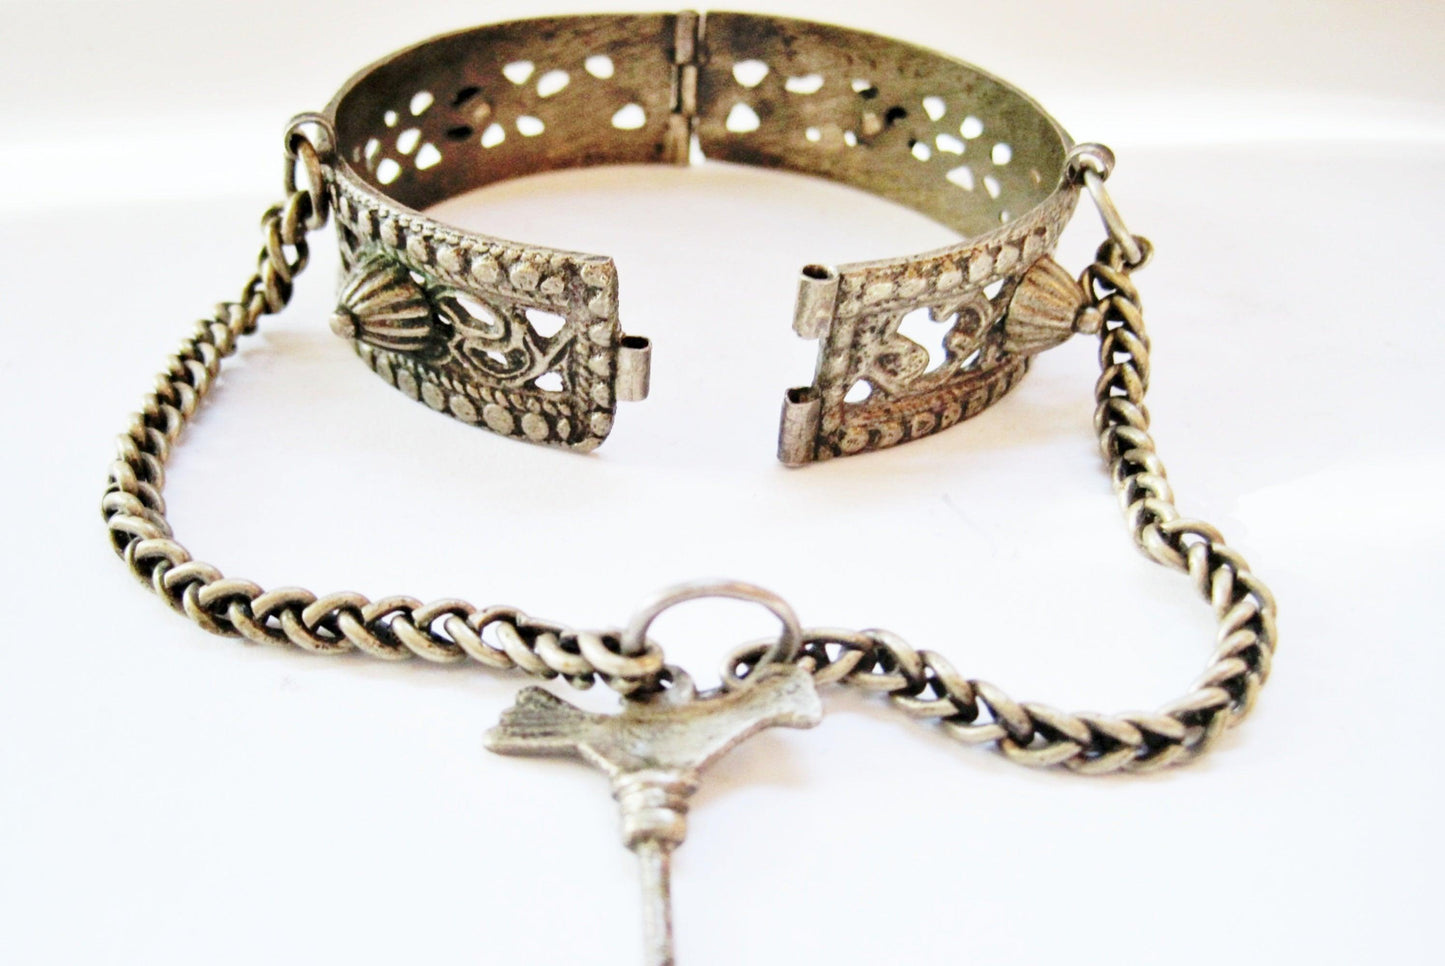 Vintage Silver Berber Bracelet with Bird Closure - Anteeka